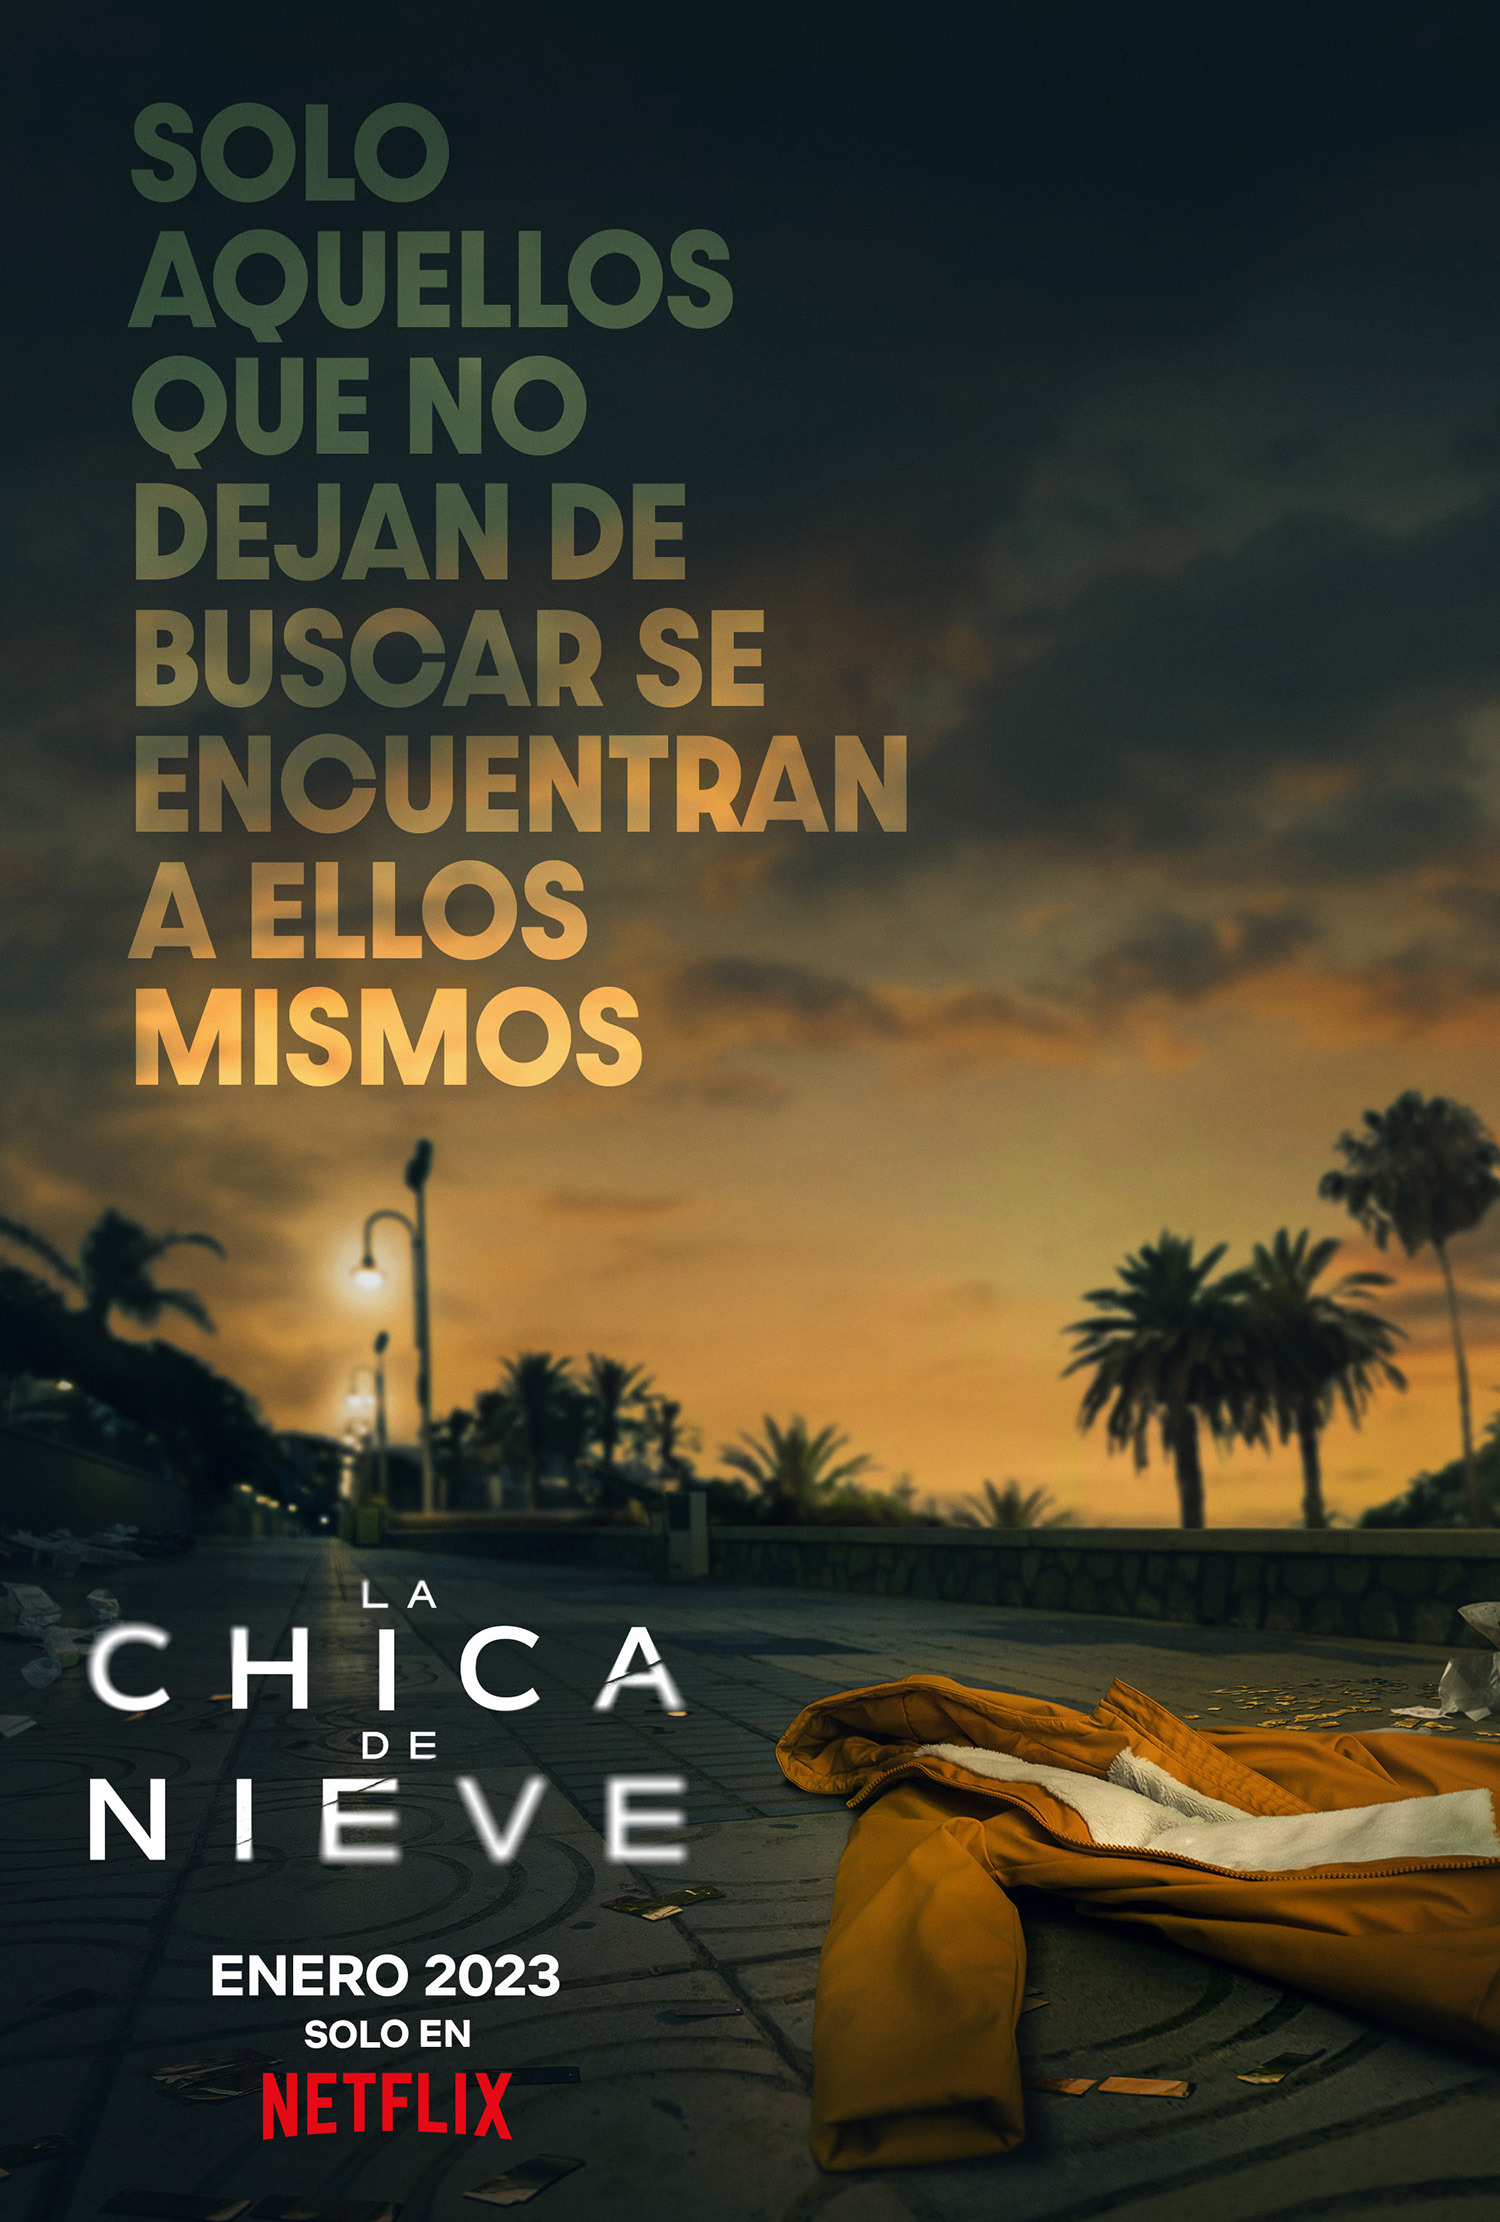 Mega Sized TV Poster Image for La chica de nieve (#1 of 6)